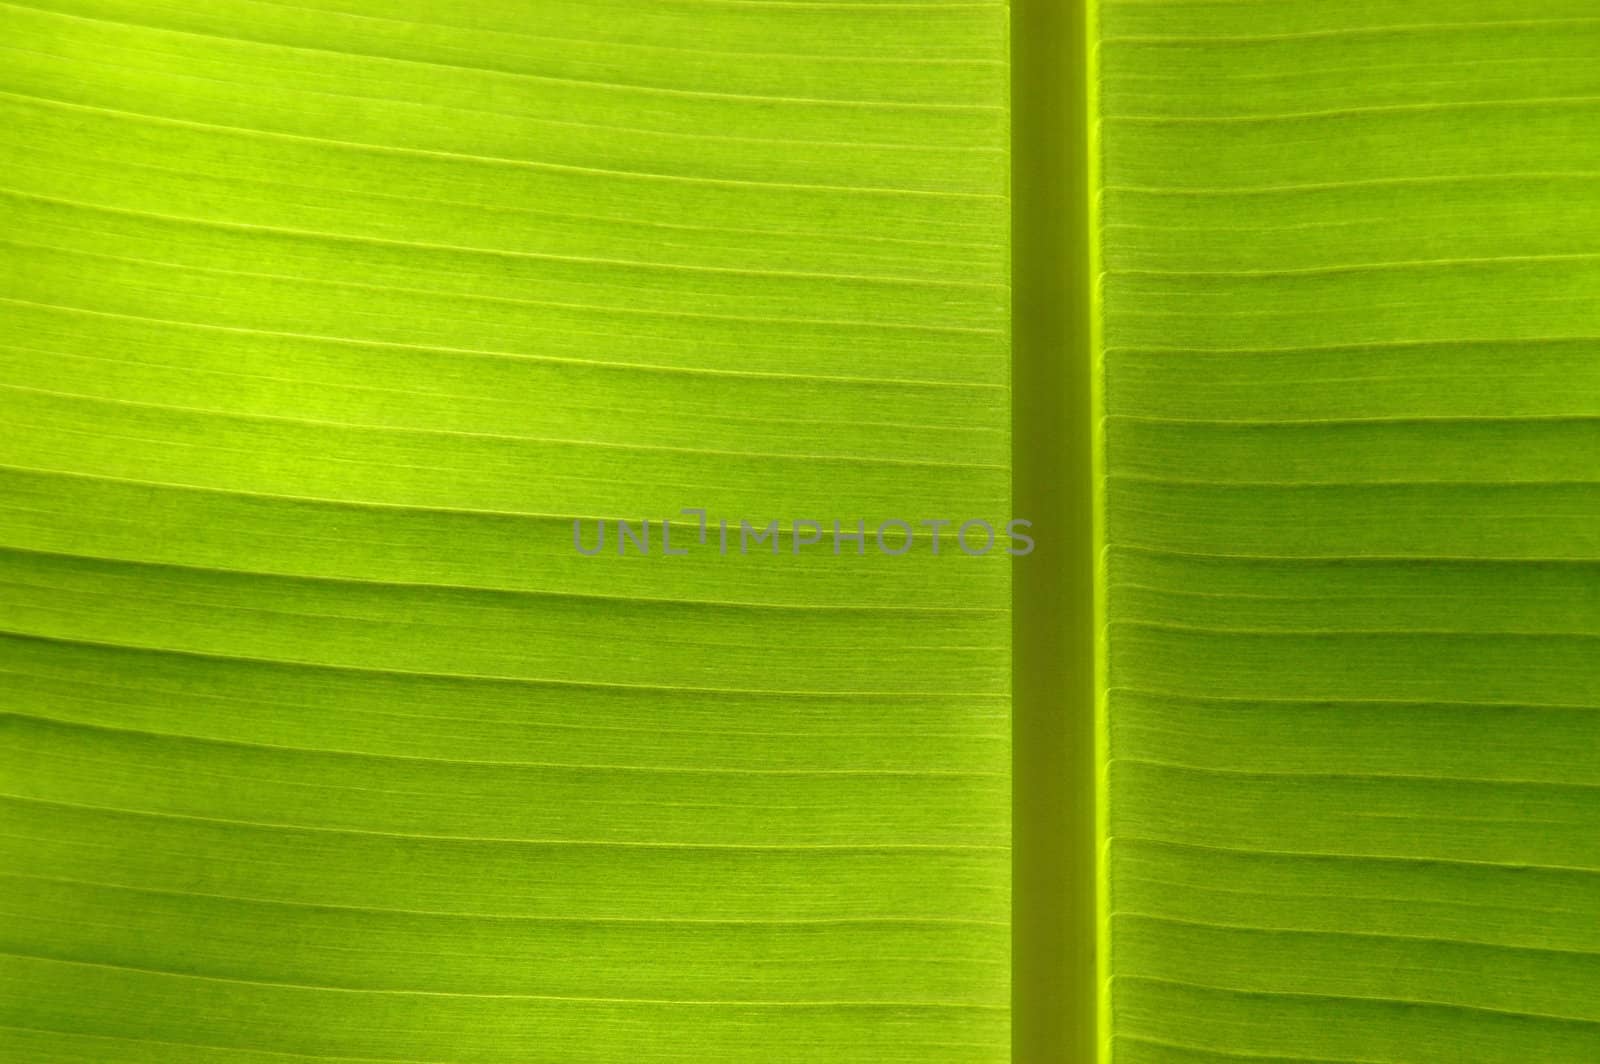 A close-up of a leaf